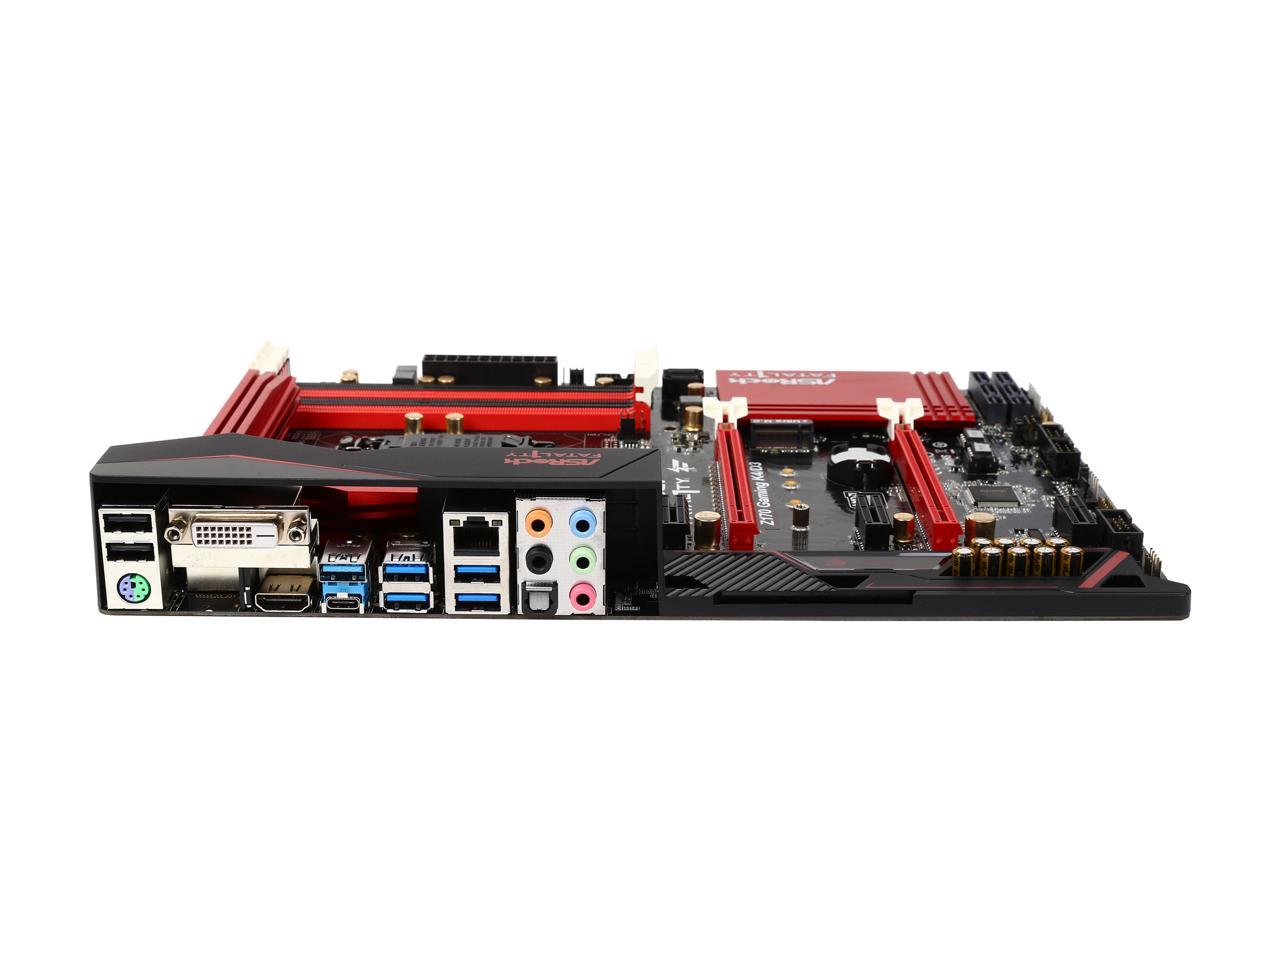 ASRock ASRock Fatal1ty Gaming Z170 Gaming K4/D3 LGA 1151 Intel Z170 HDMI SATA 6Gb/s USB 3.0 ATX Intel Motherboard